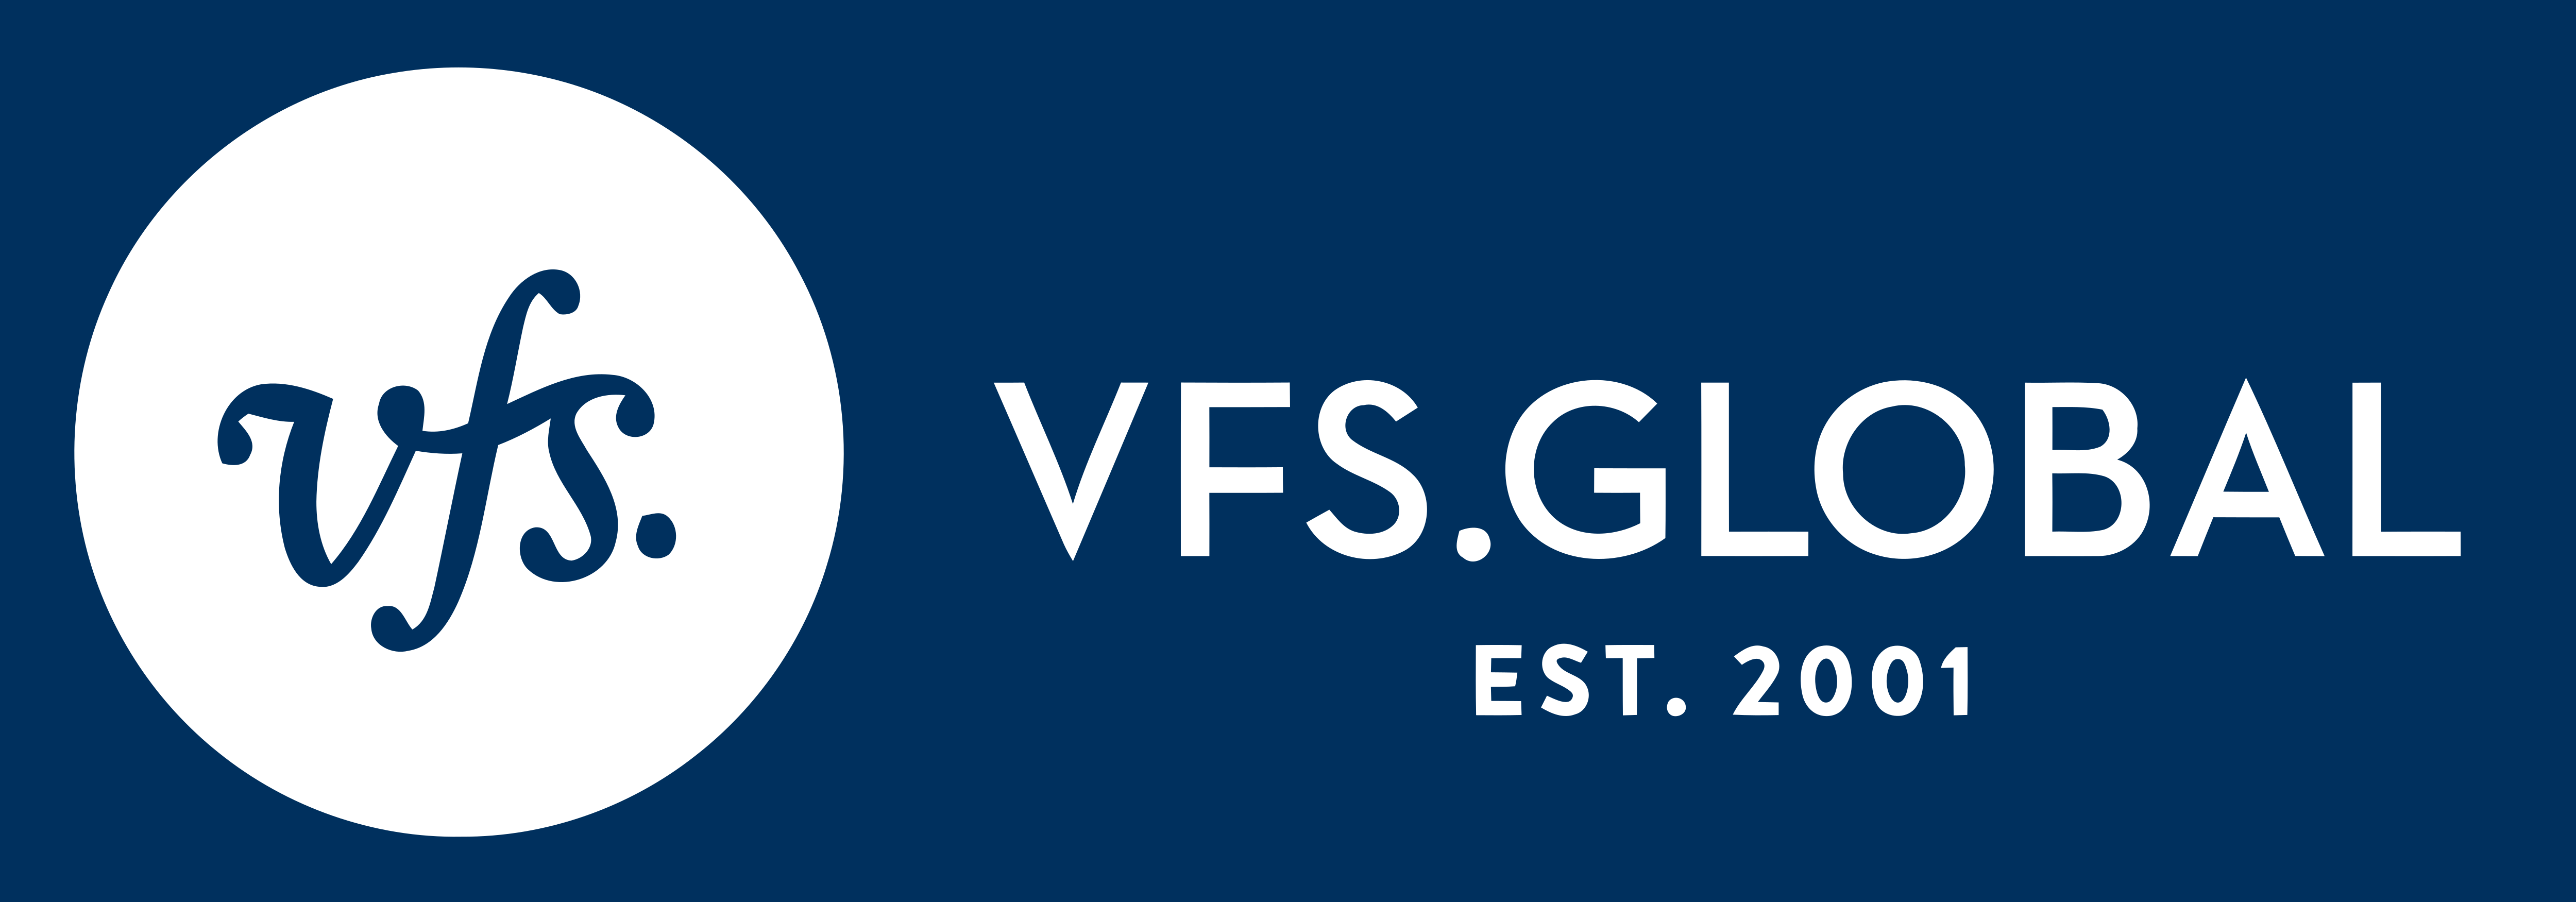 Proxy mondial VFS